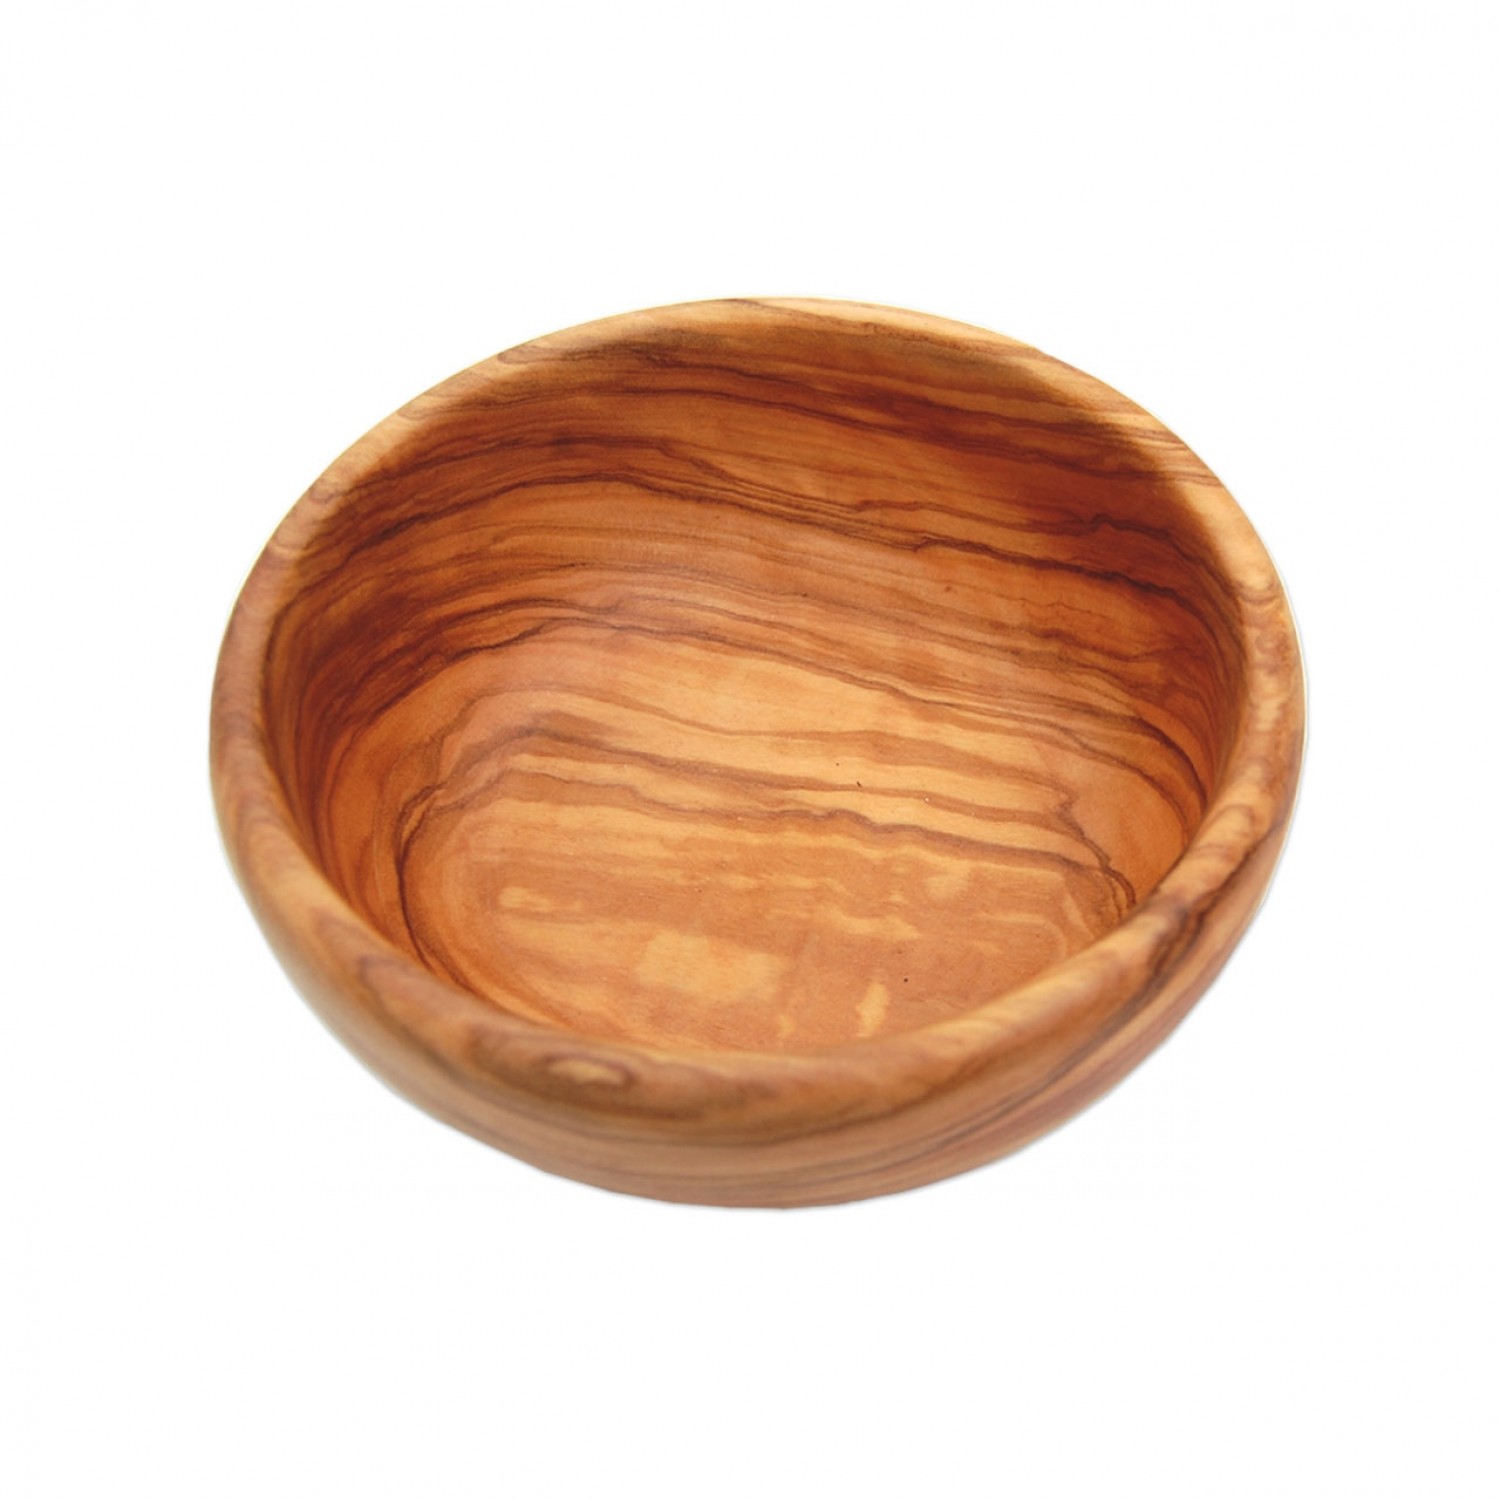 Natural Pet Food Bowl made of Olive Wood | D.O.M.